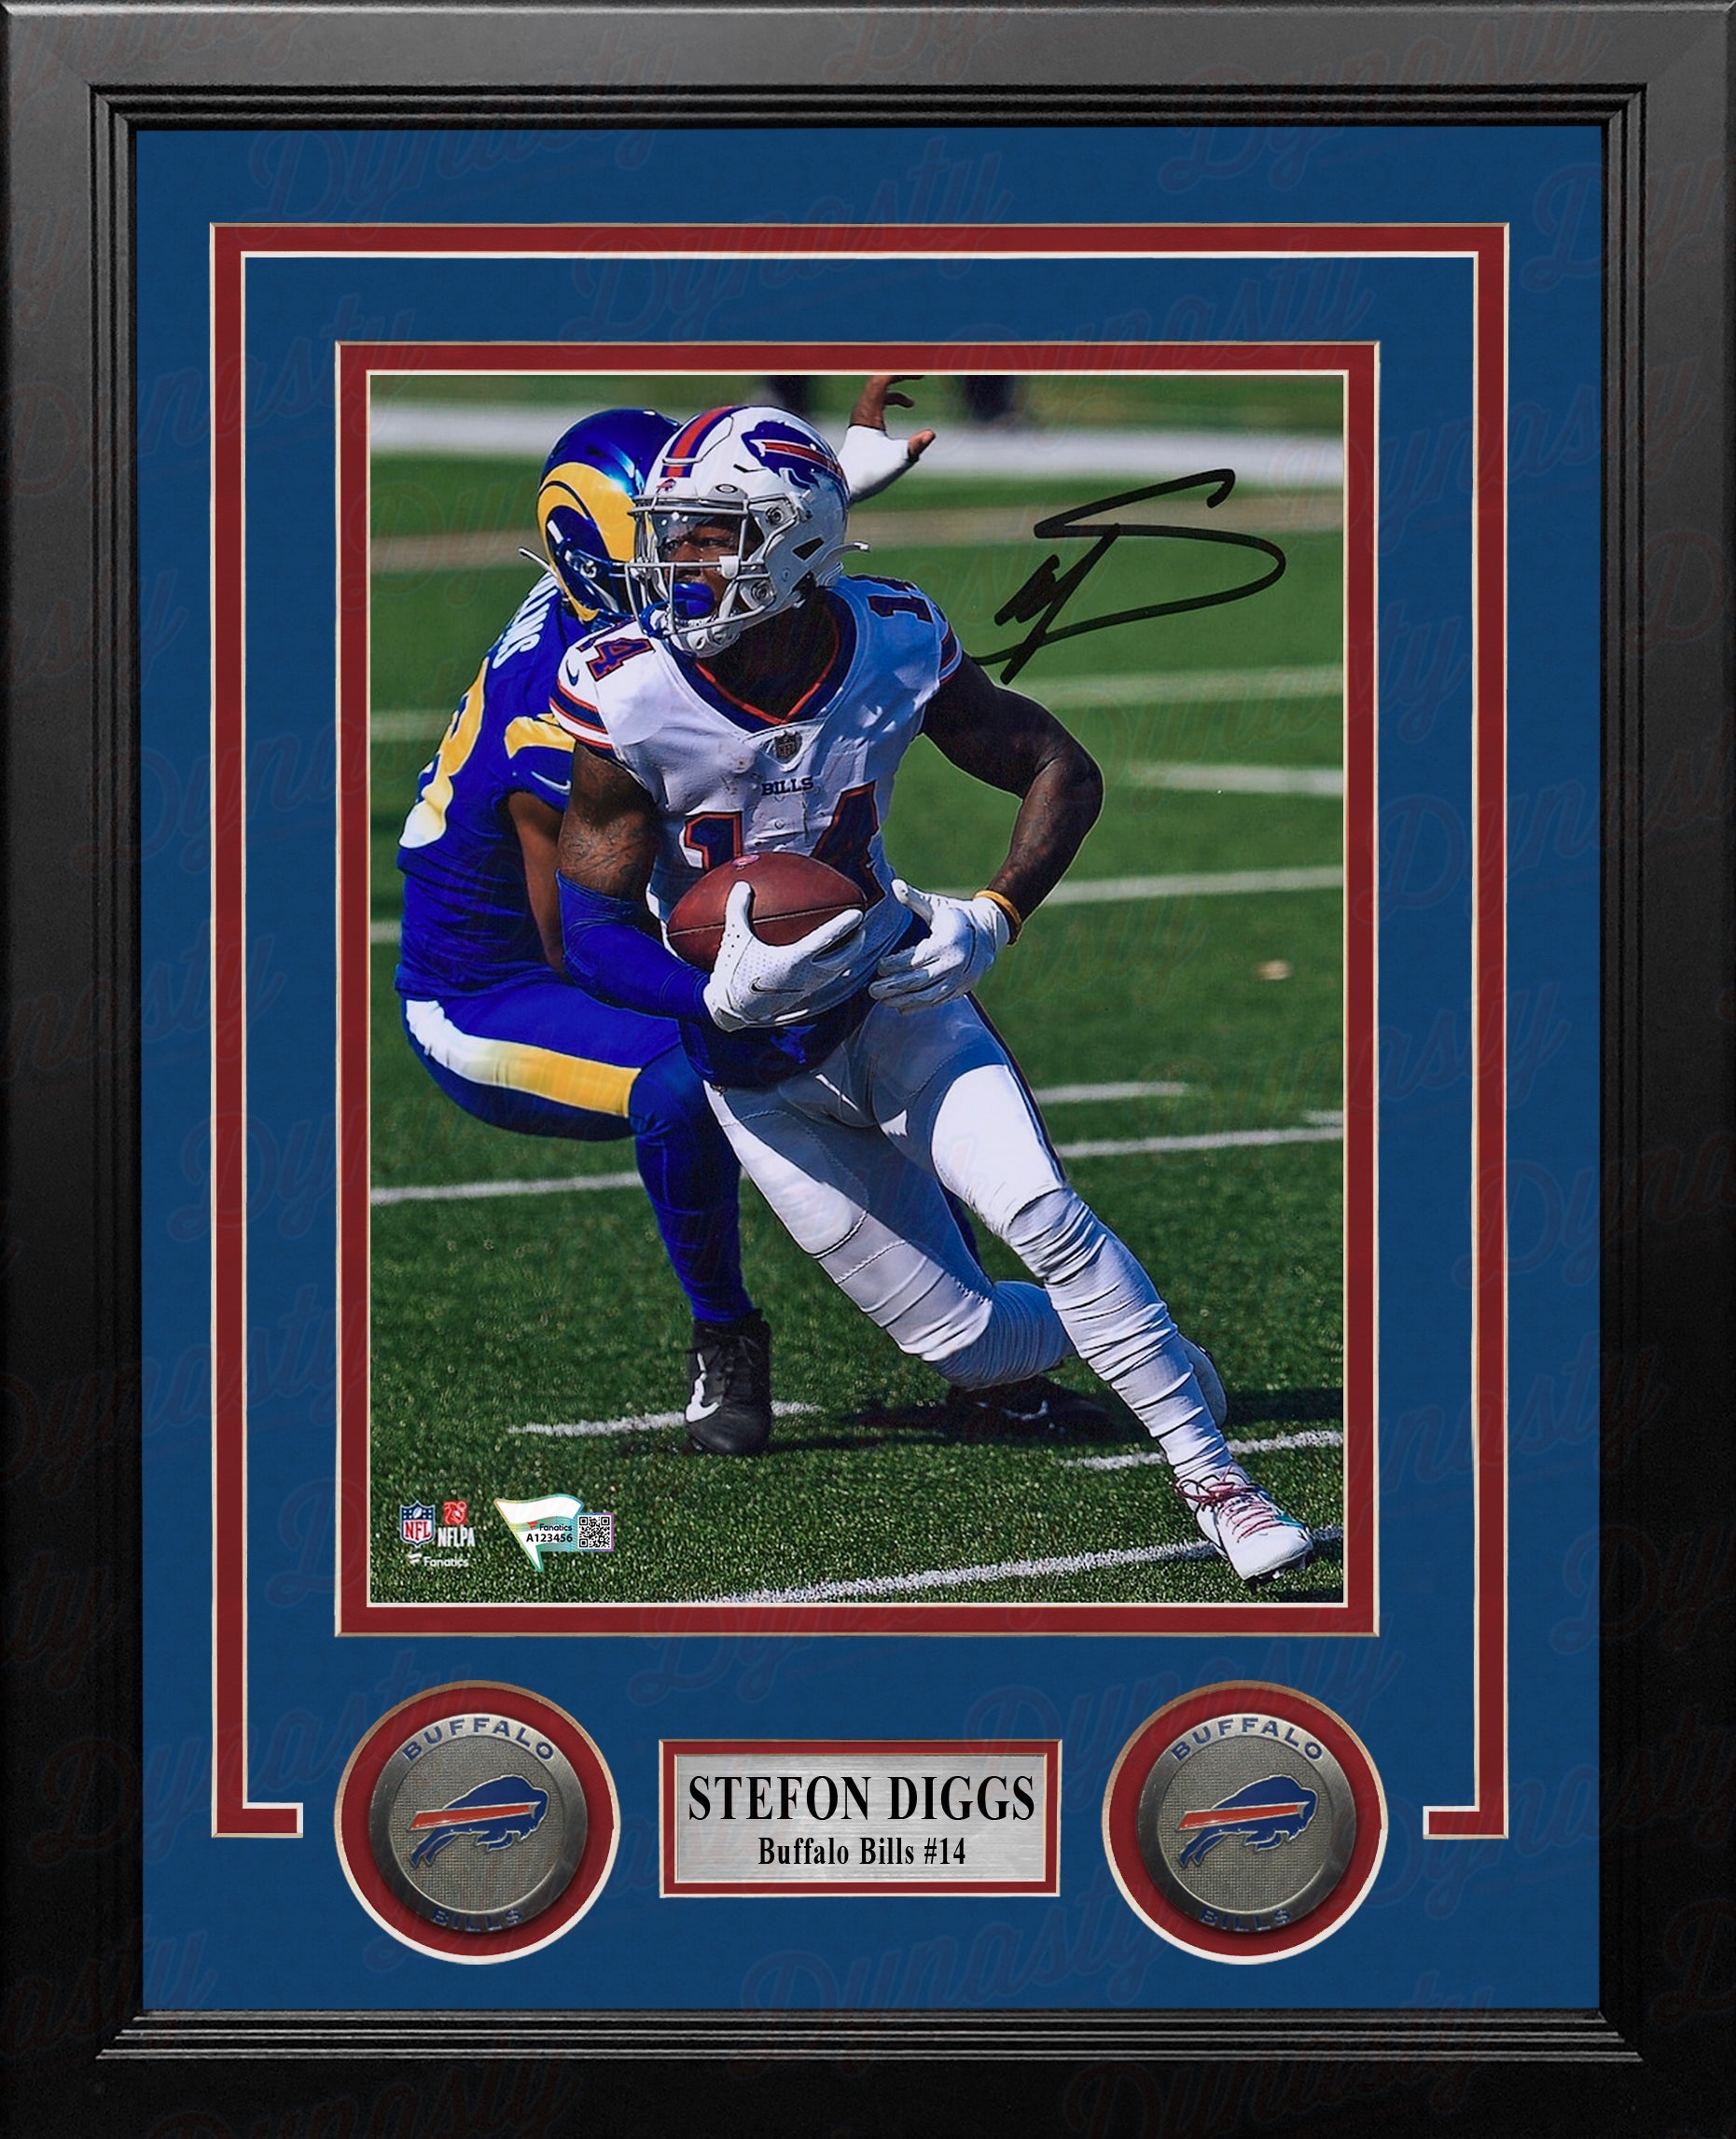  Stefon Diggs Signed 35x43 Framed Buffalo Bills Jersey